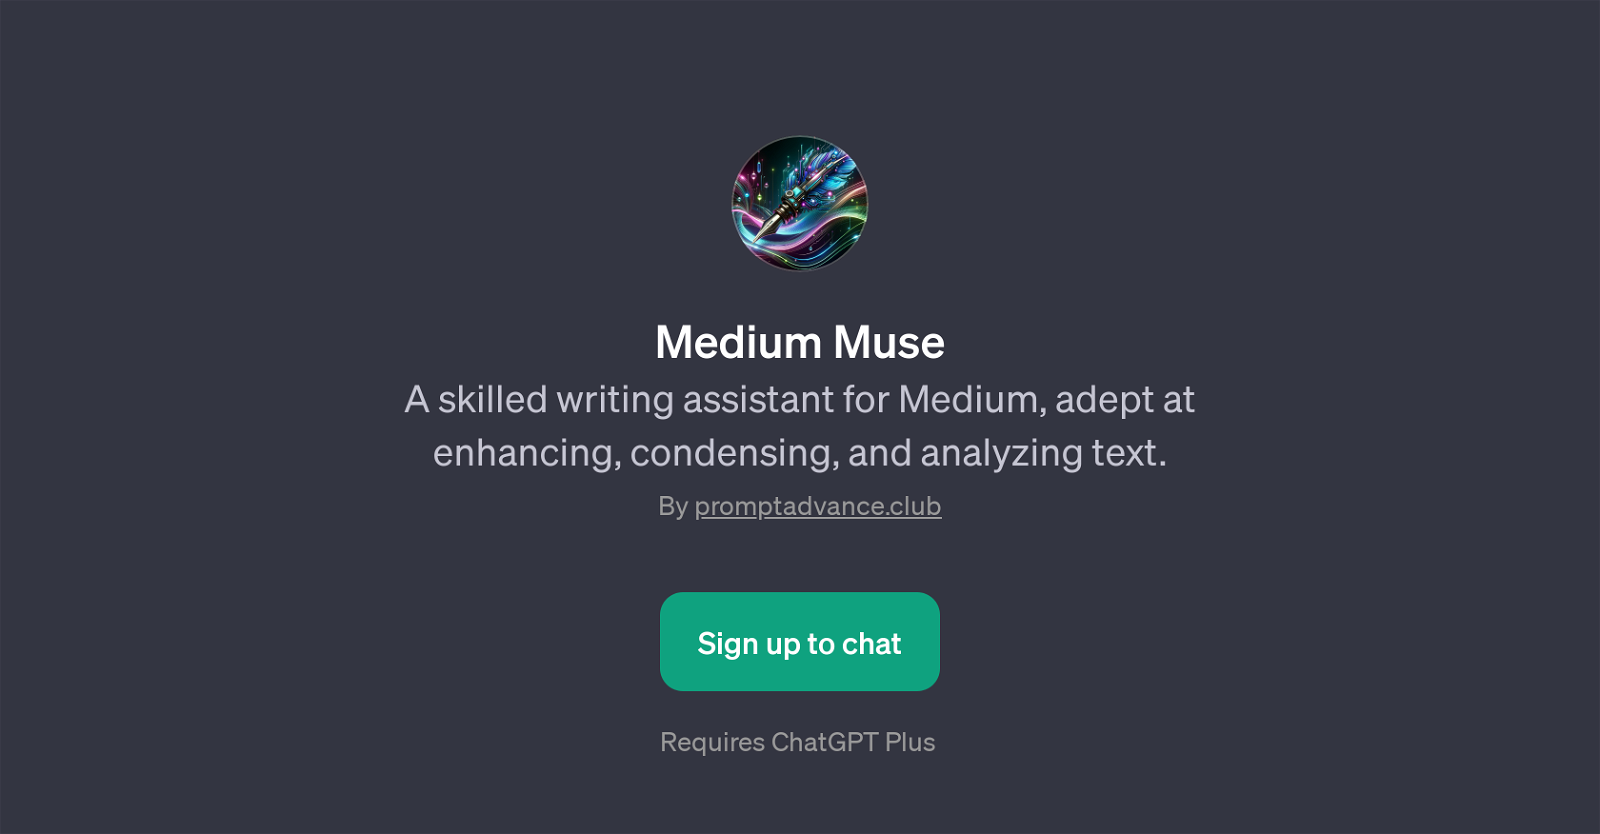 Medium Muse website